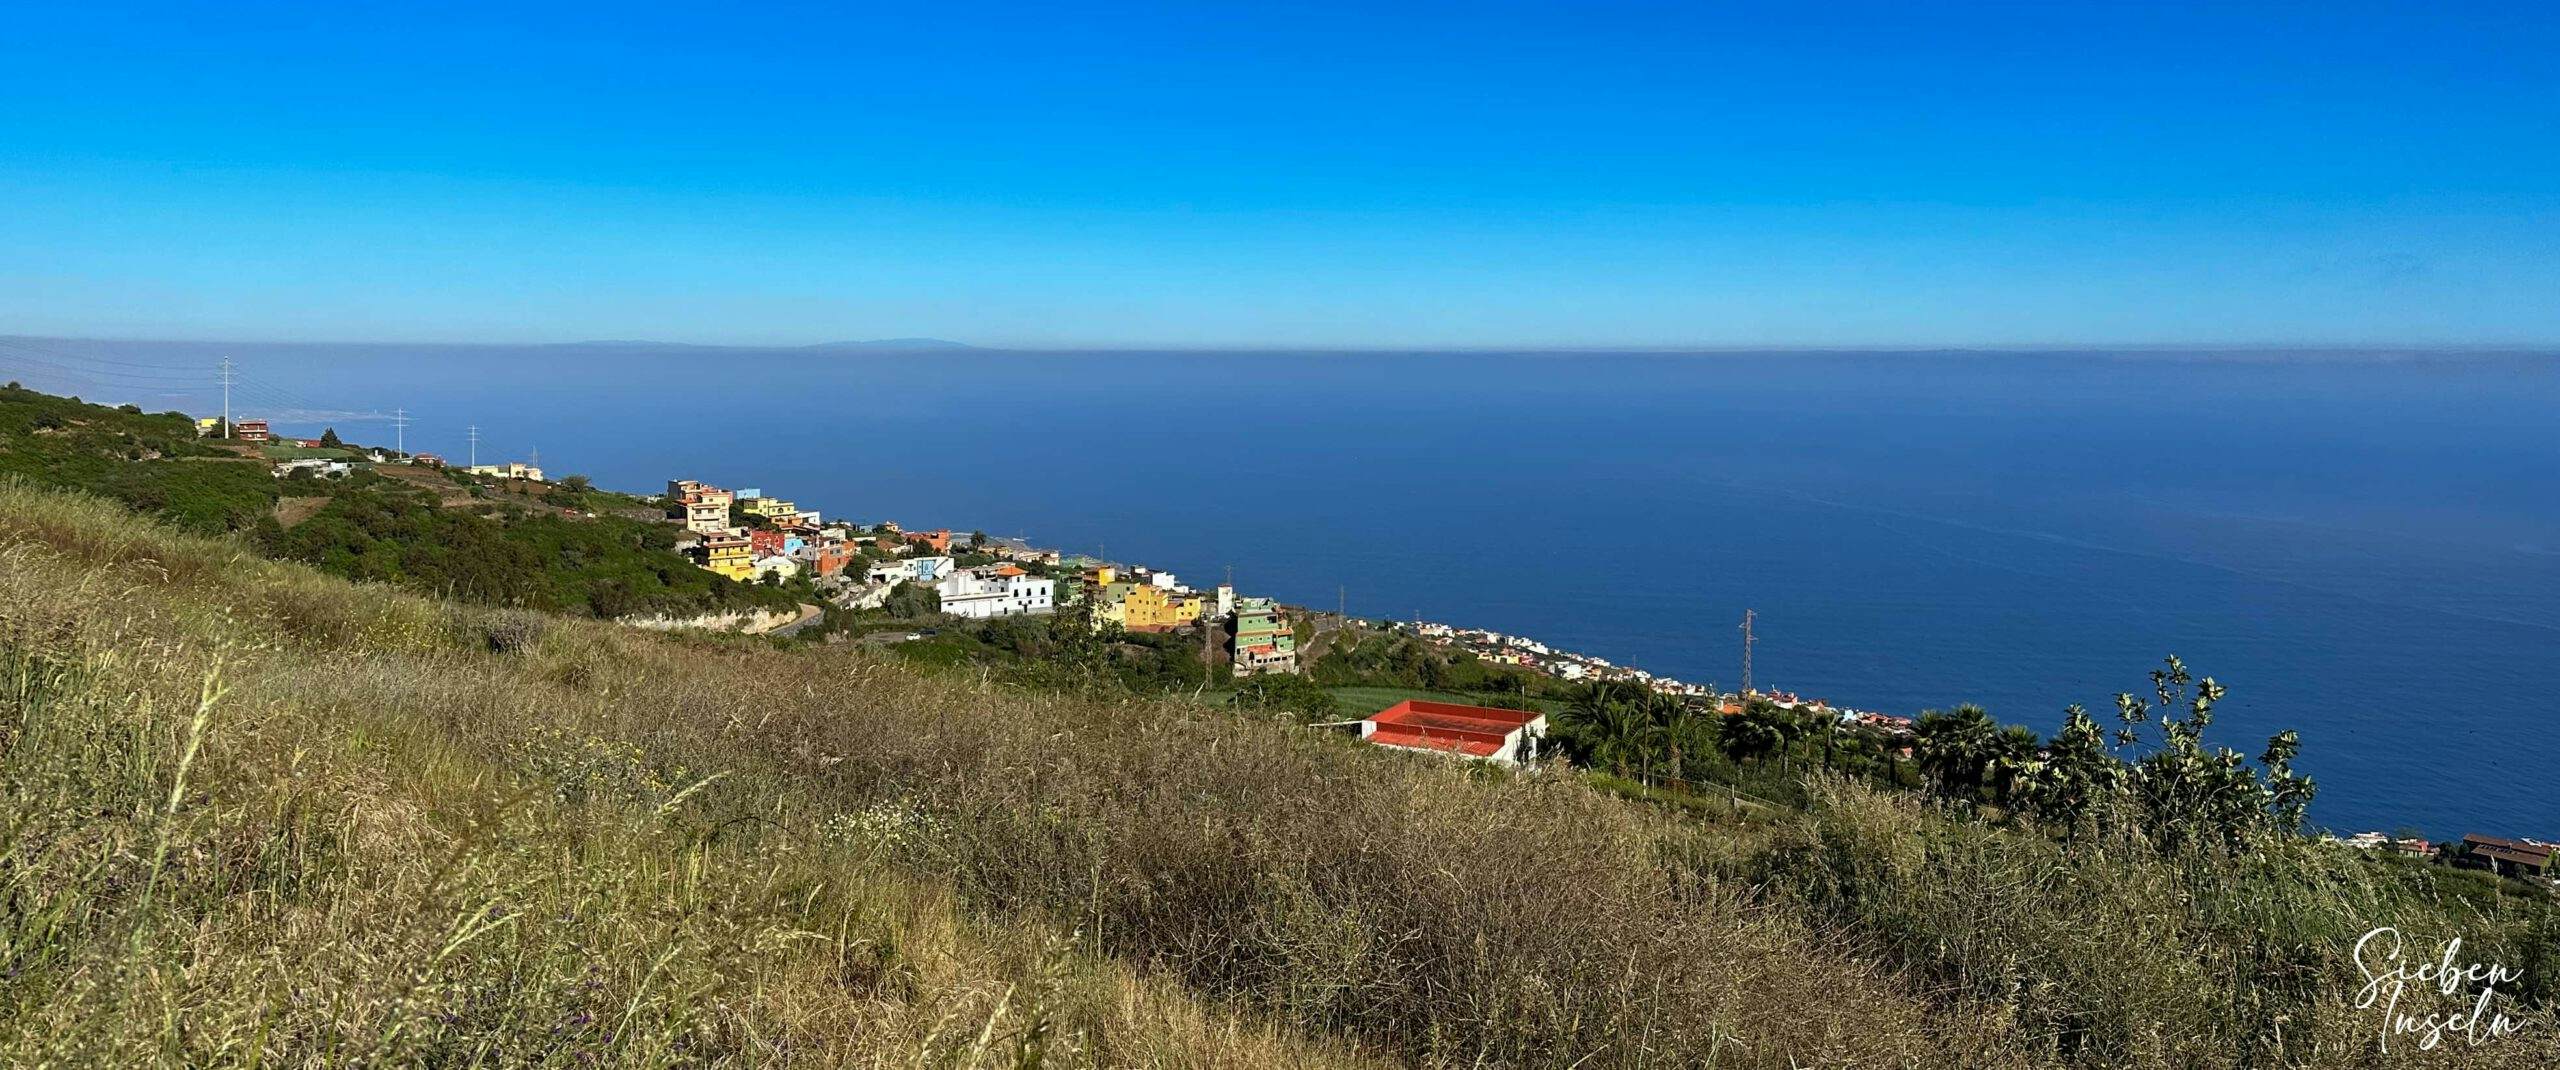 View from the hiking trail behind the Mirador de La Corona to the coast and La Palma